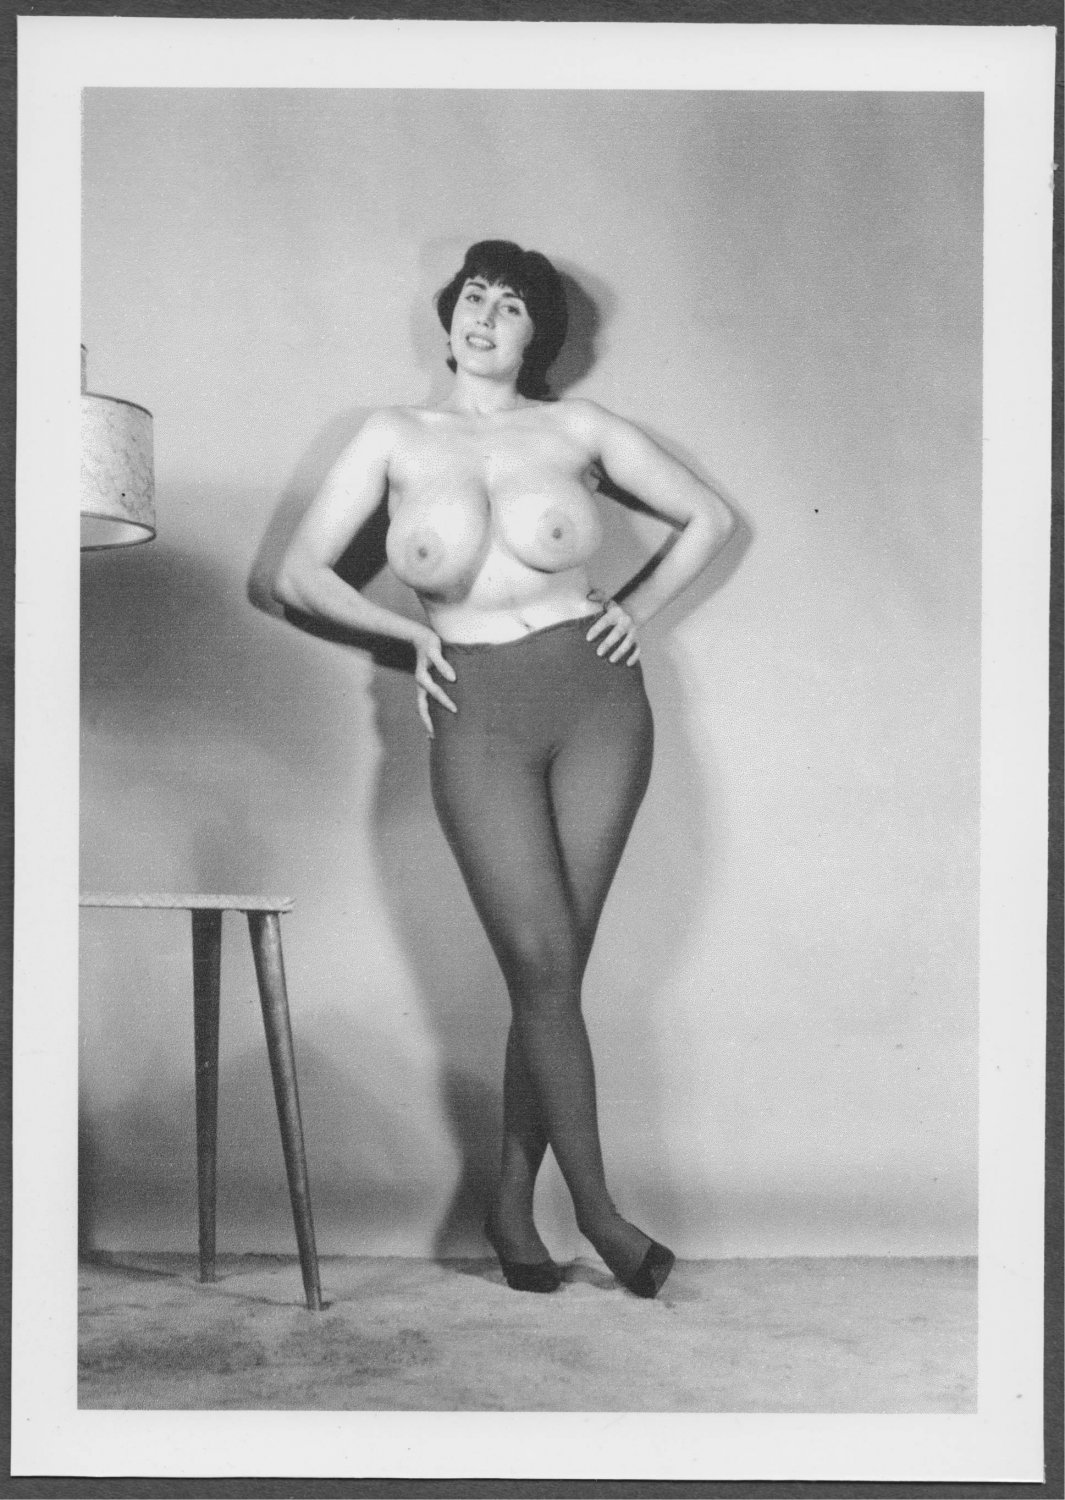 Linda west topless nude huge heavy hanging boobs pose 5X7 reprint LW-76.